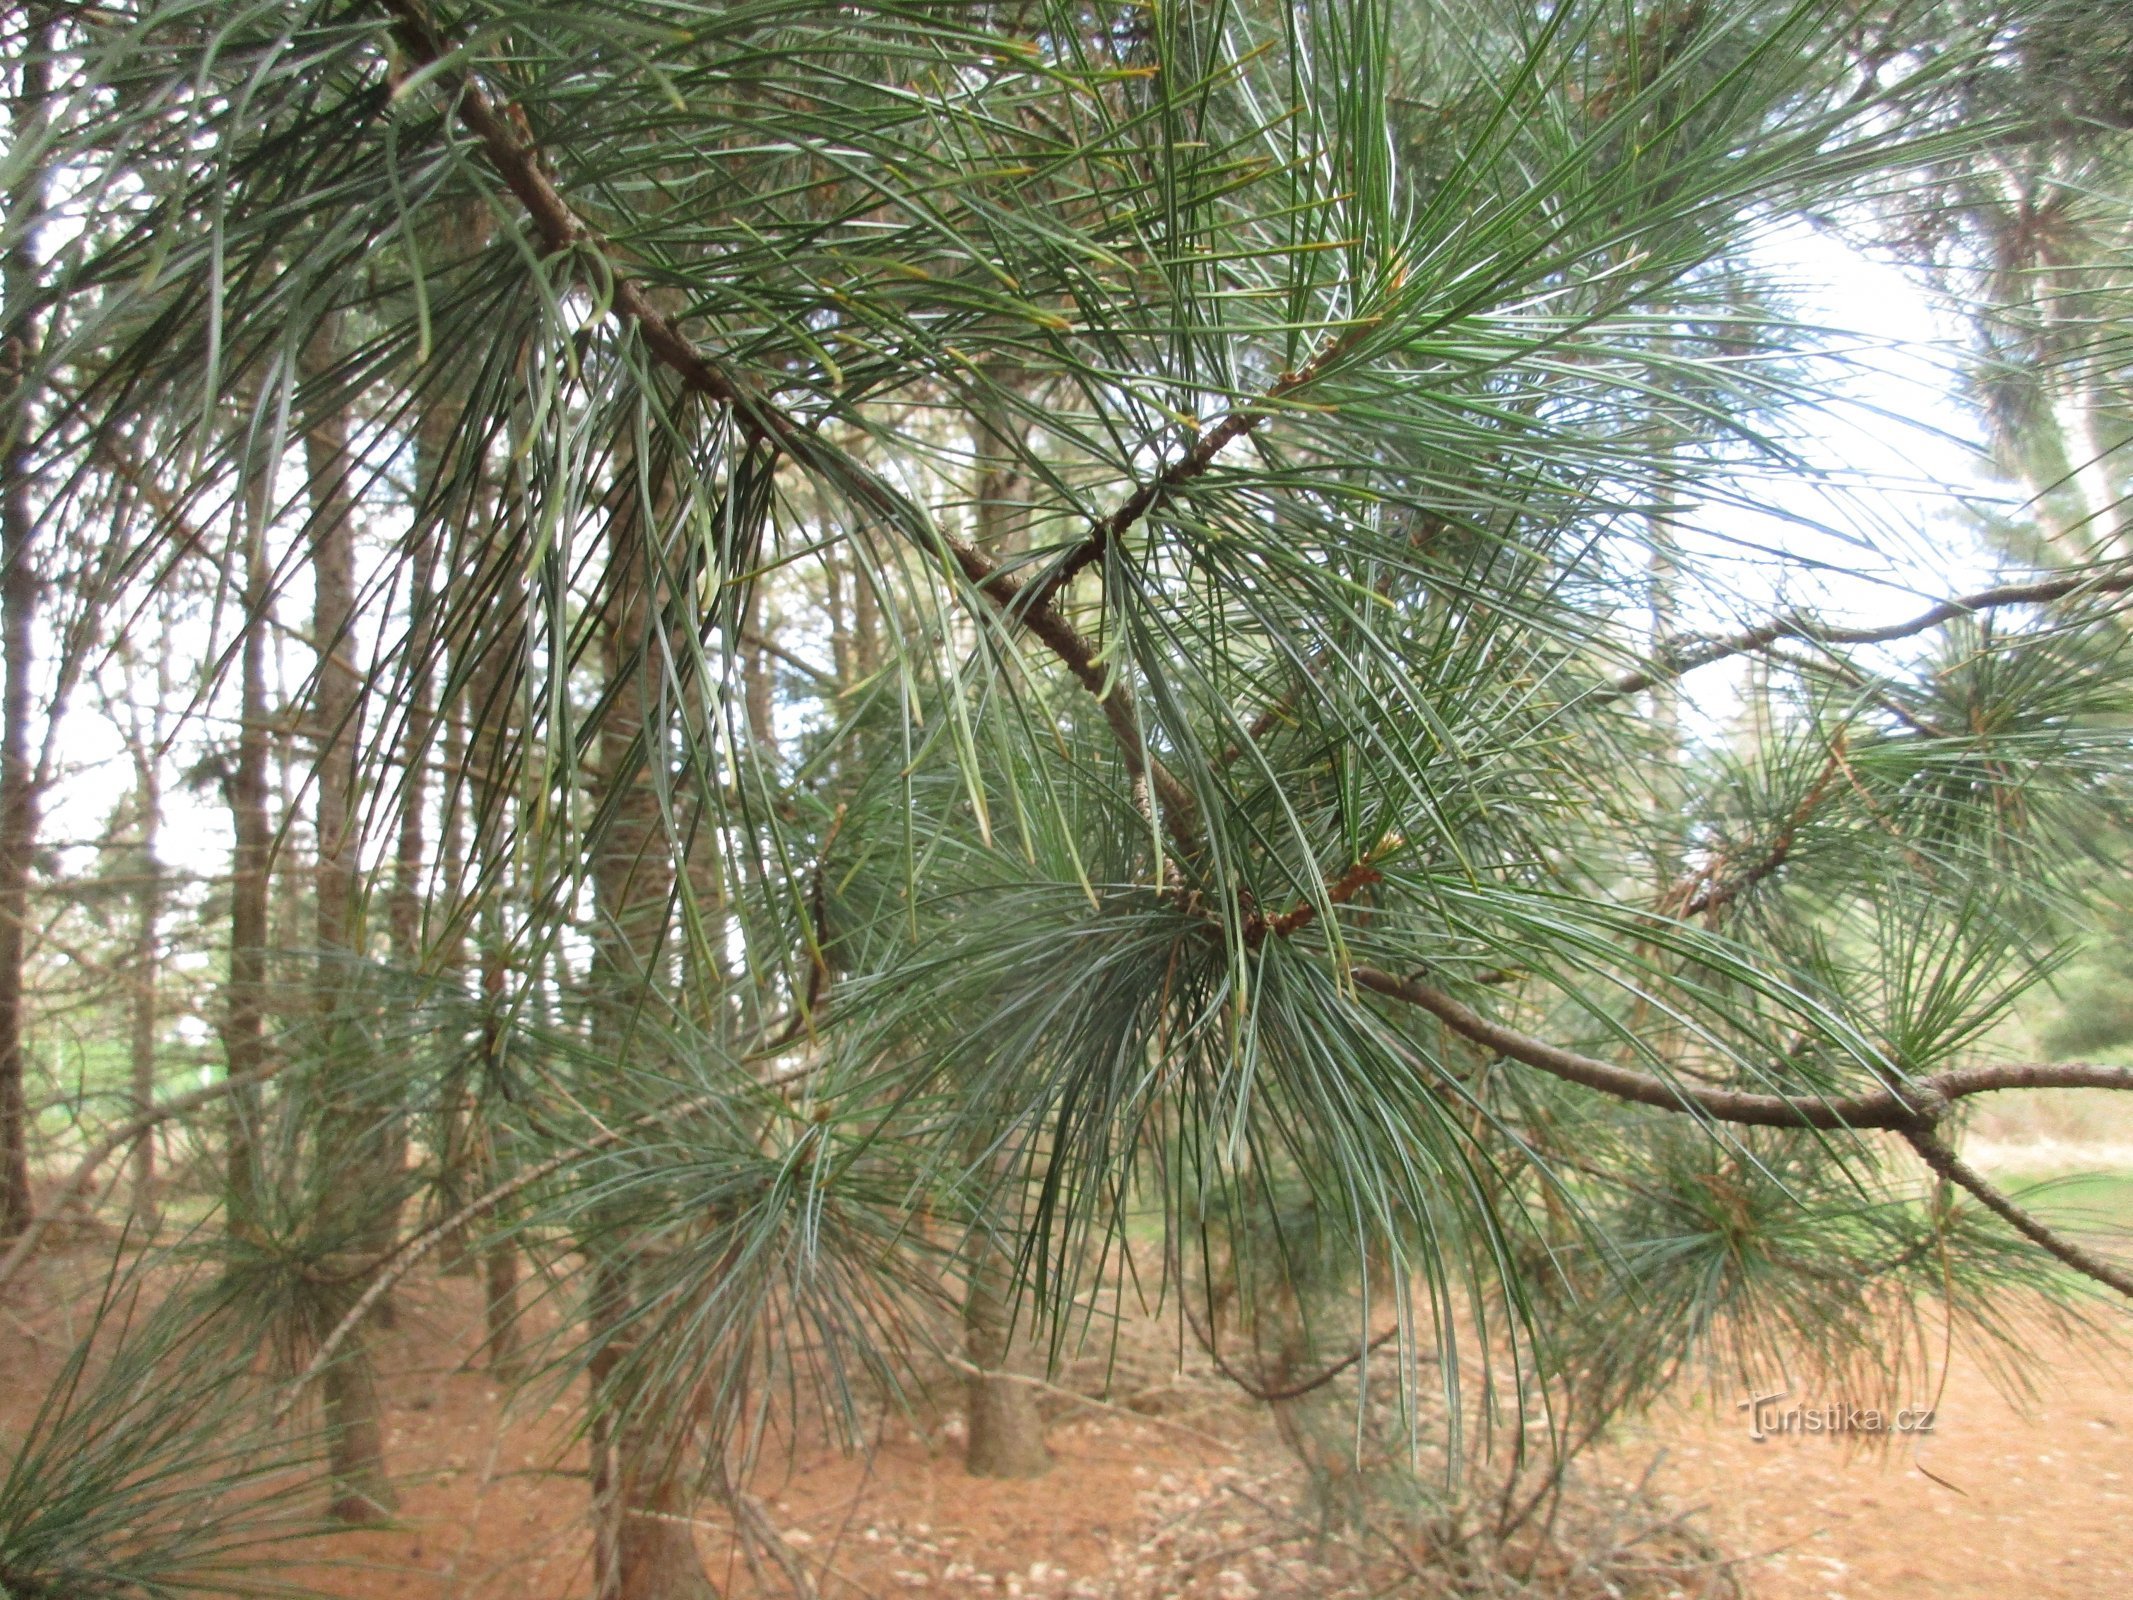 Sofronk Arboretum: Among the pines